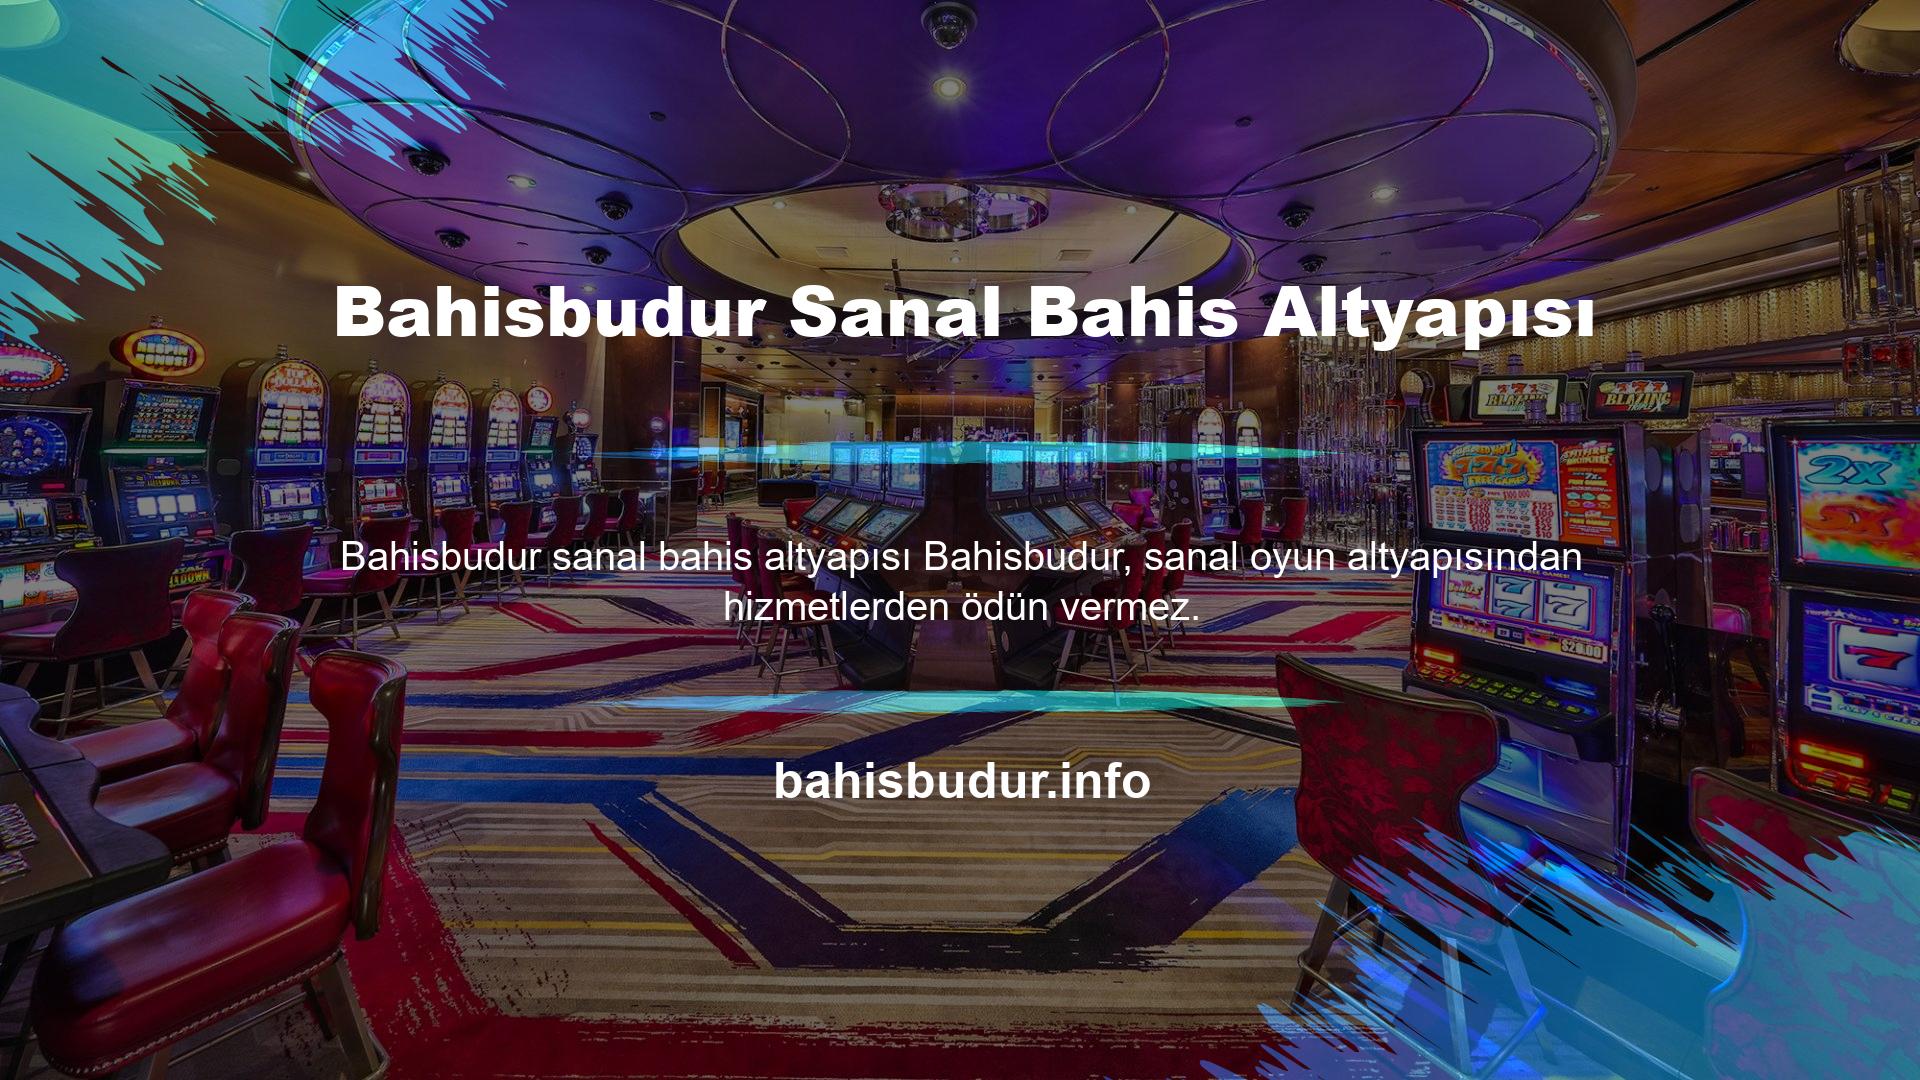 Bahisbudur sanal bahis altyapısı